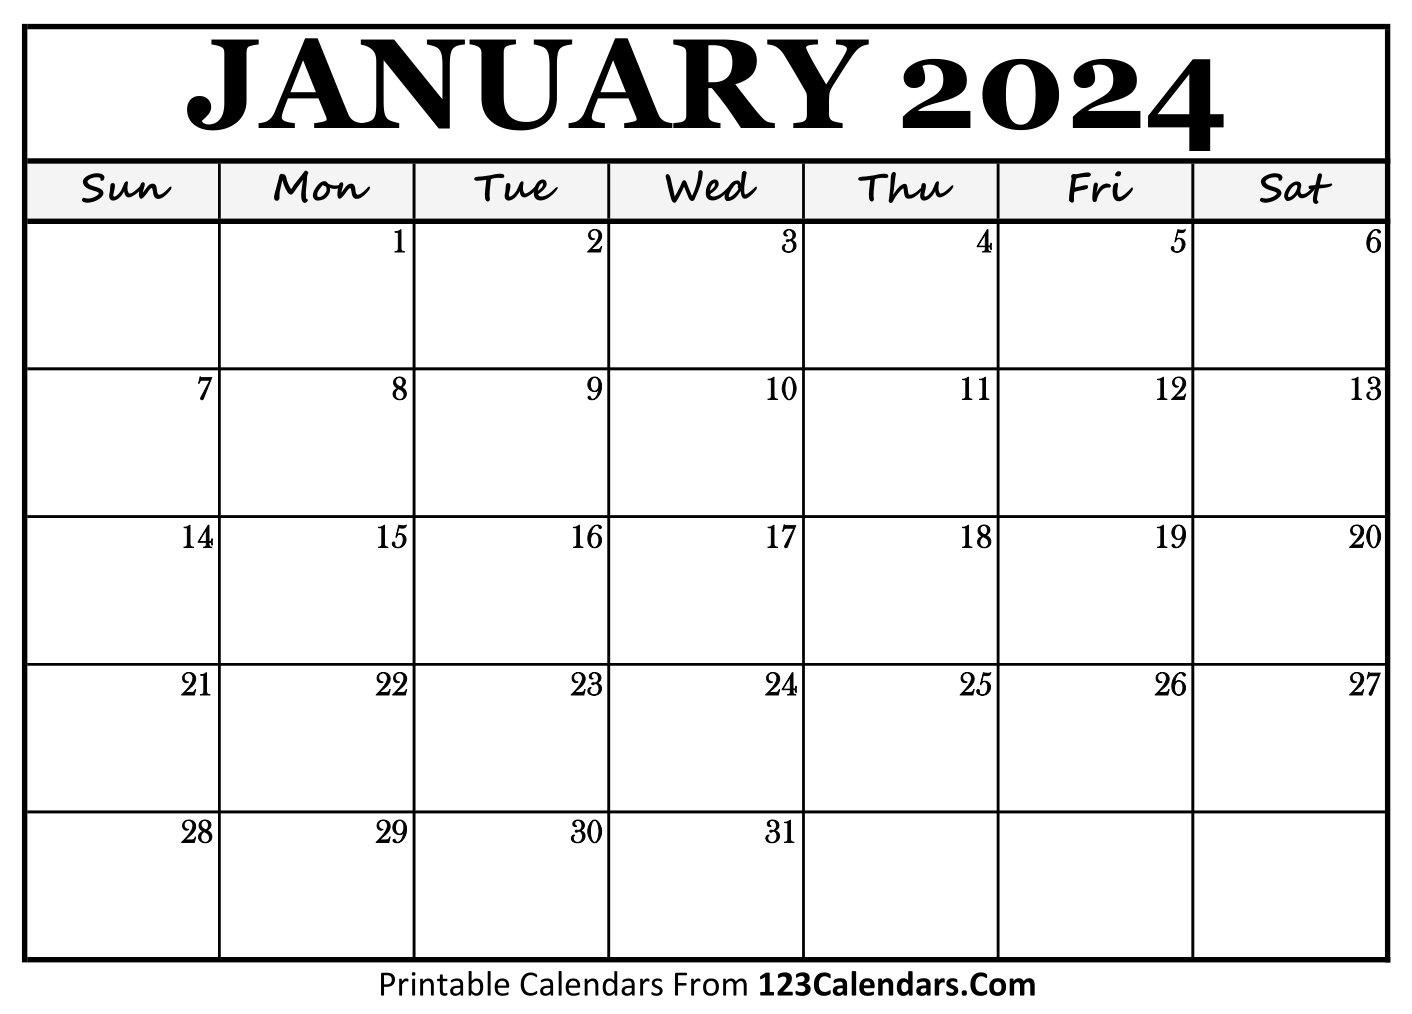 Printable January 2024 Calendar Templates - 123Calendars | 123 Calendar 2024 Printable